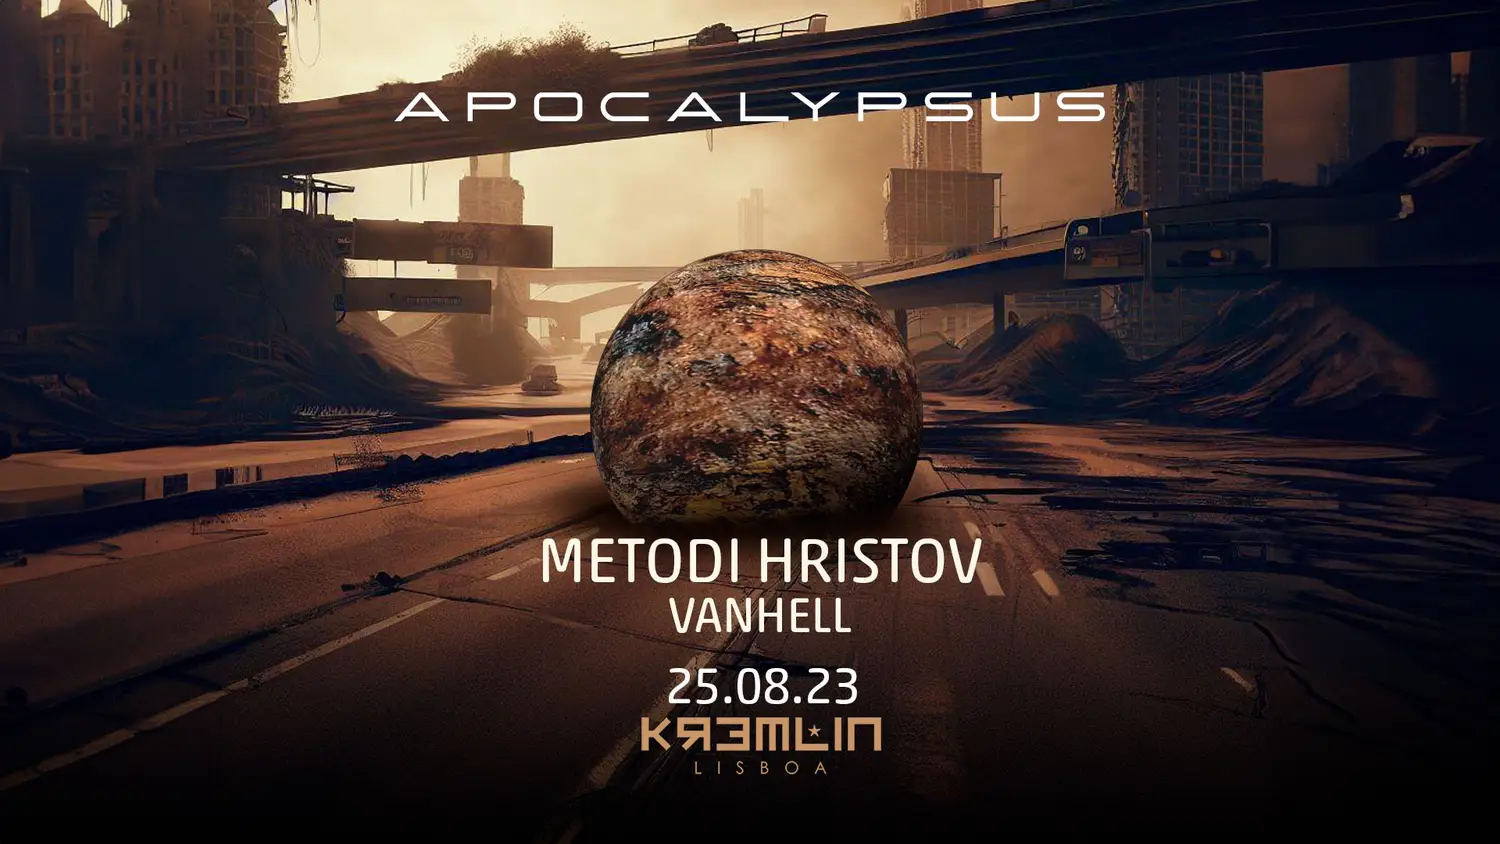 Apocalipsus with Metodi Hristov